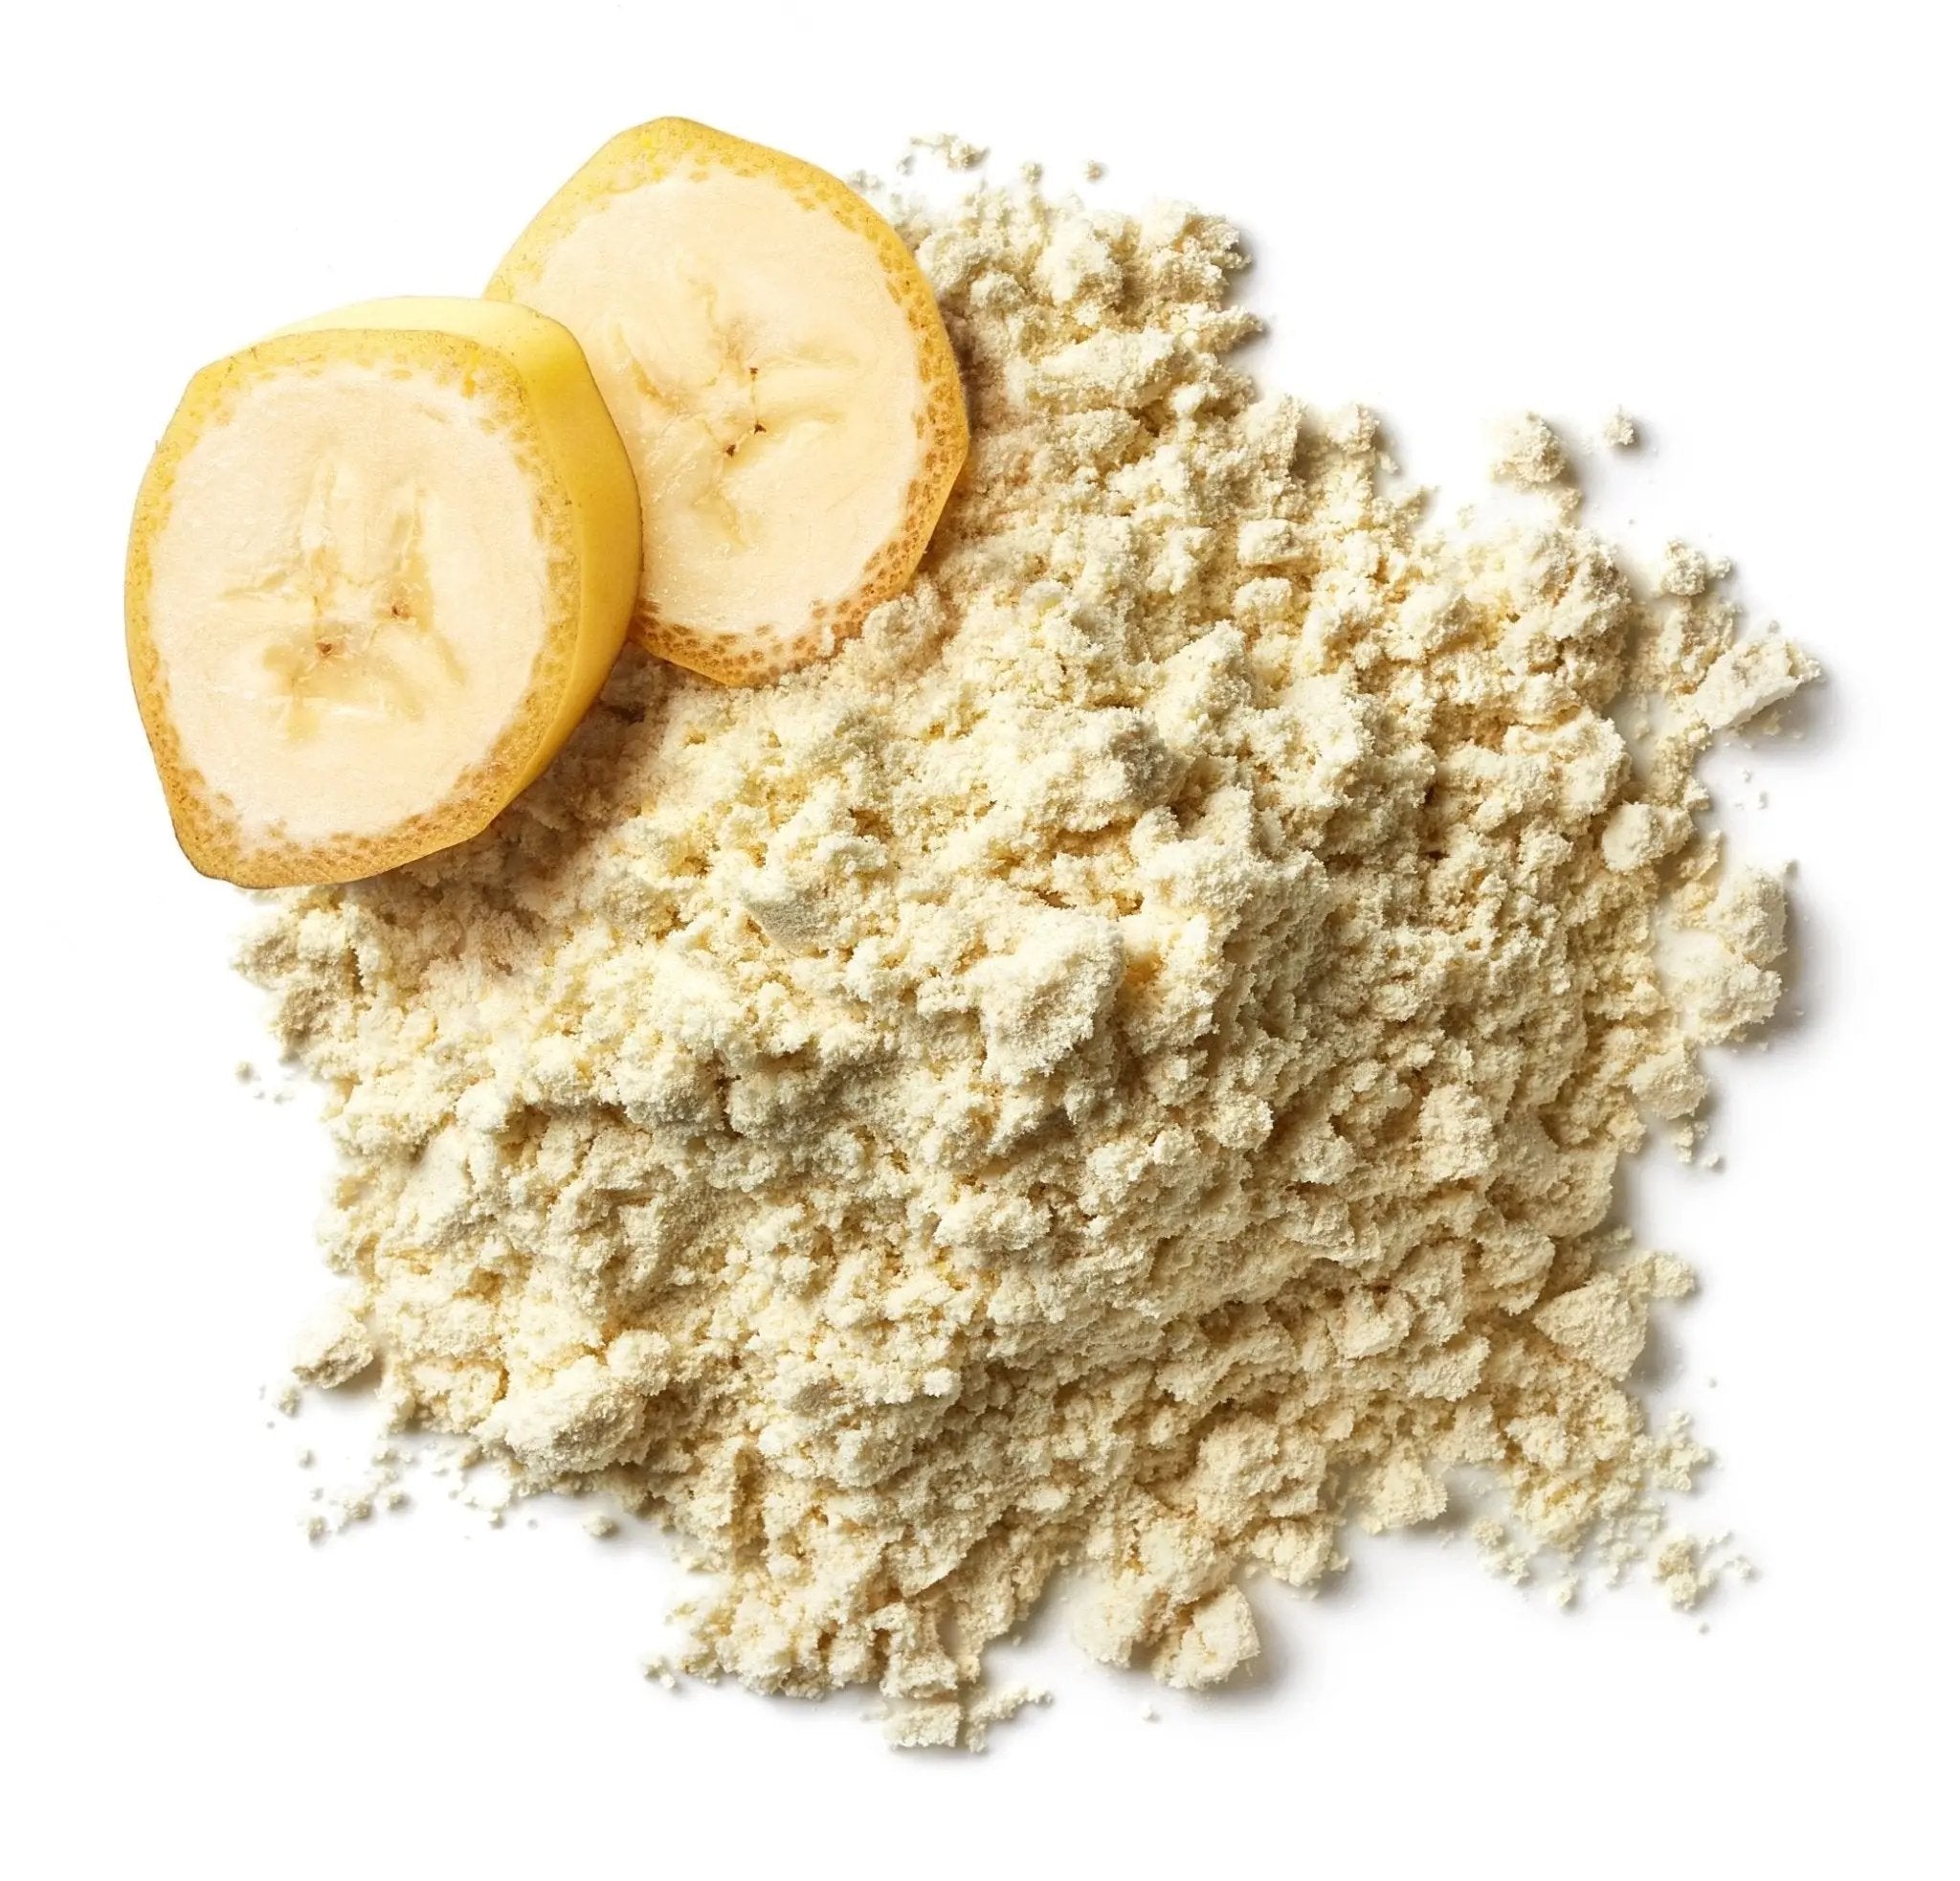 Cape Crystal Banana Powder Goodness – 8-oz., Freeze-Dried for Superior Taste, USDA Certified Organic, Non-GMO, Gluten Free, Vegan - Cape Crystal Brands